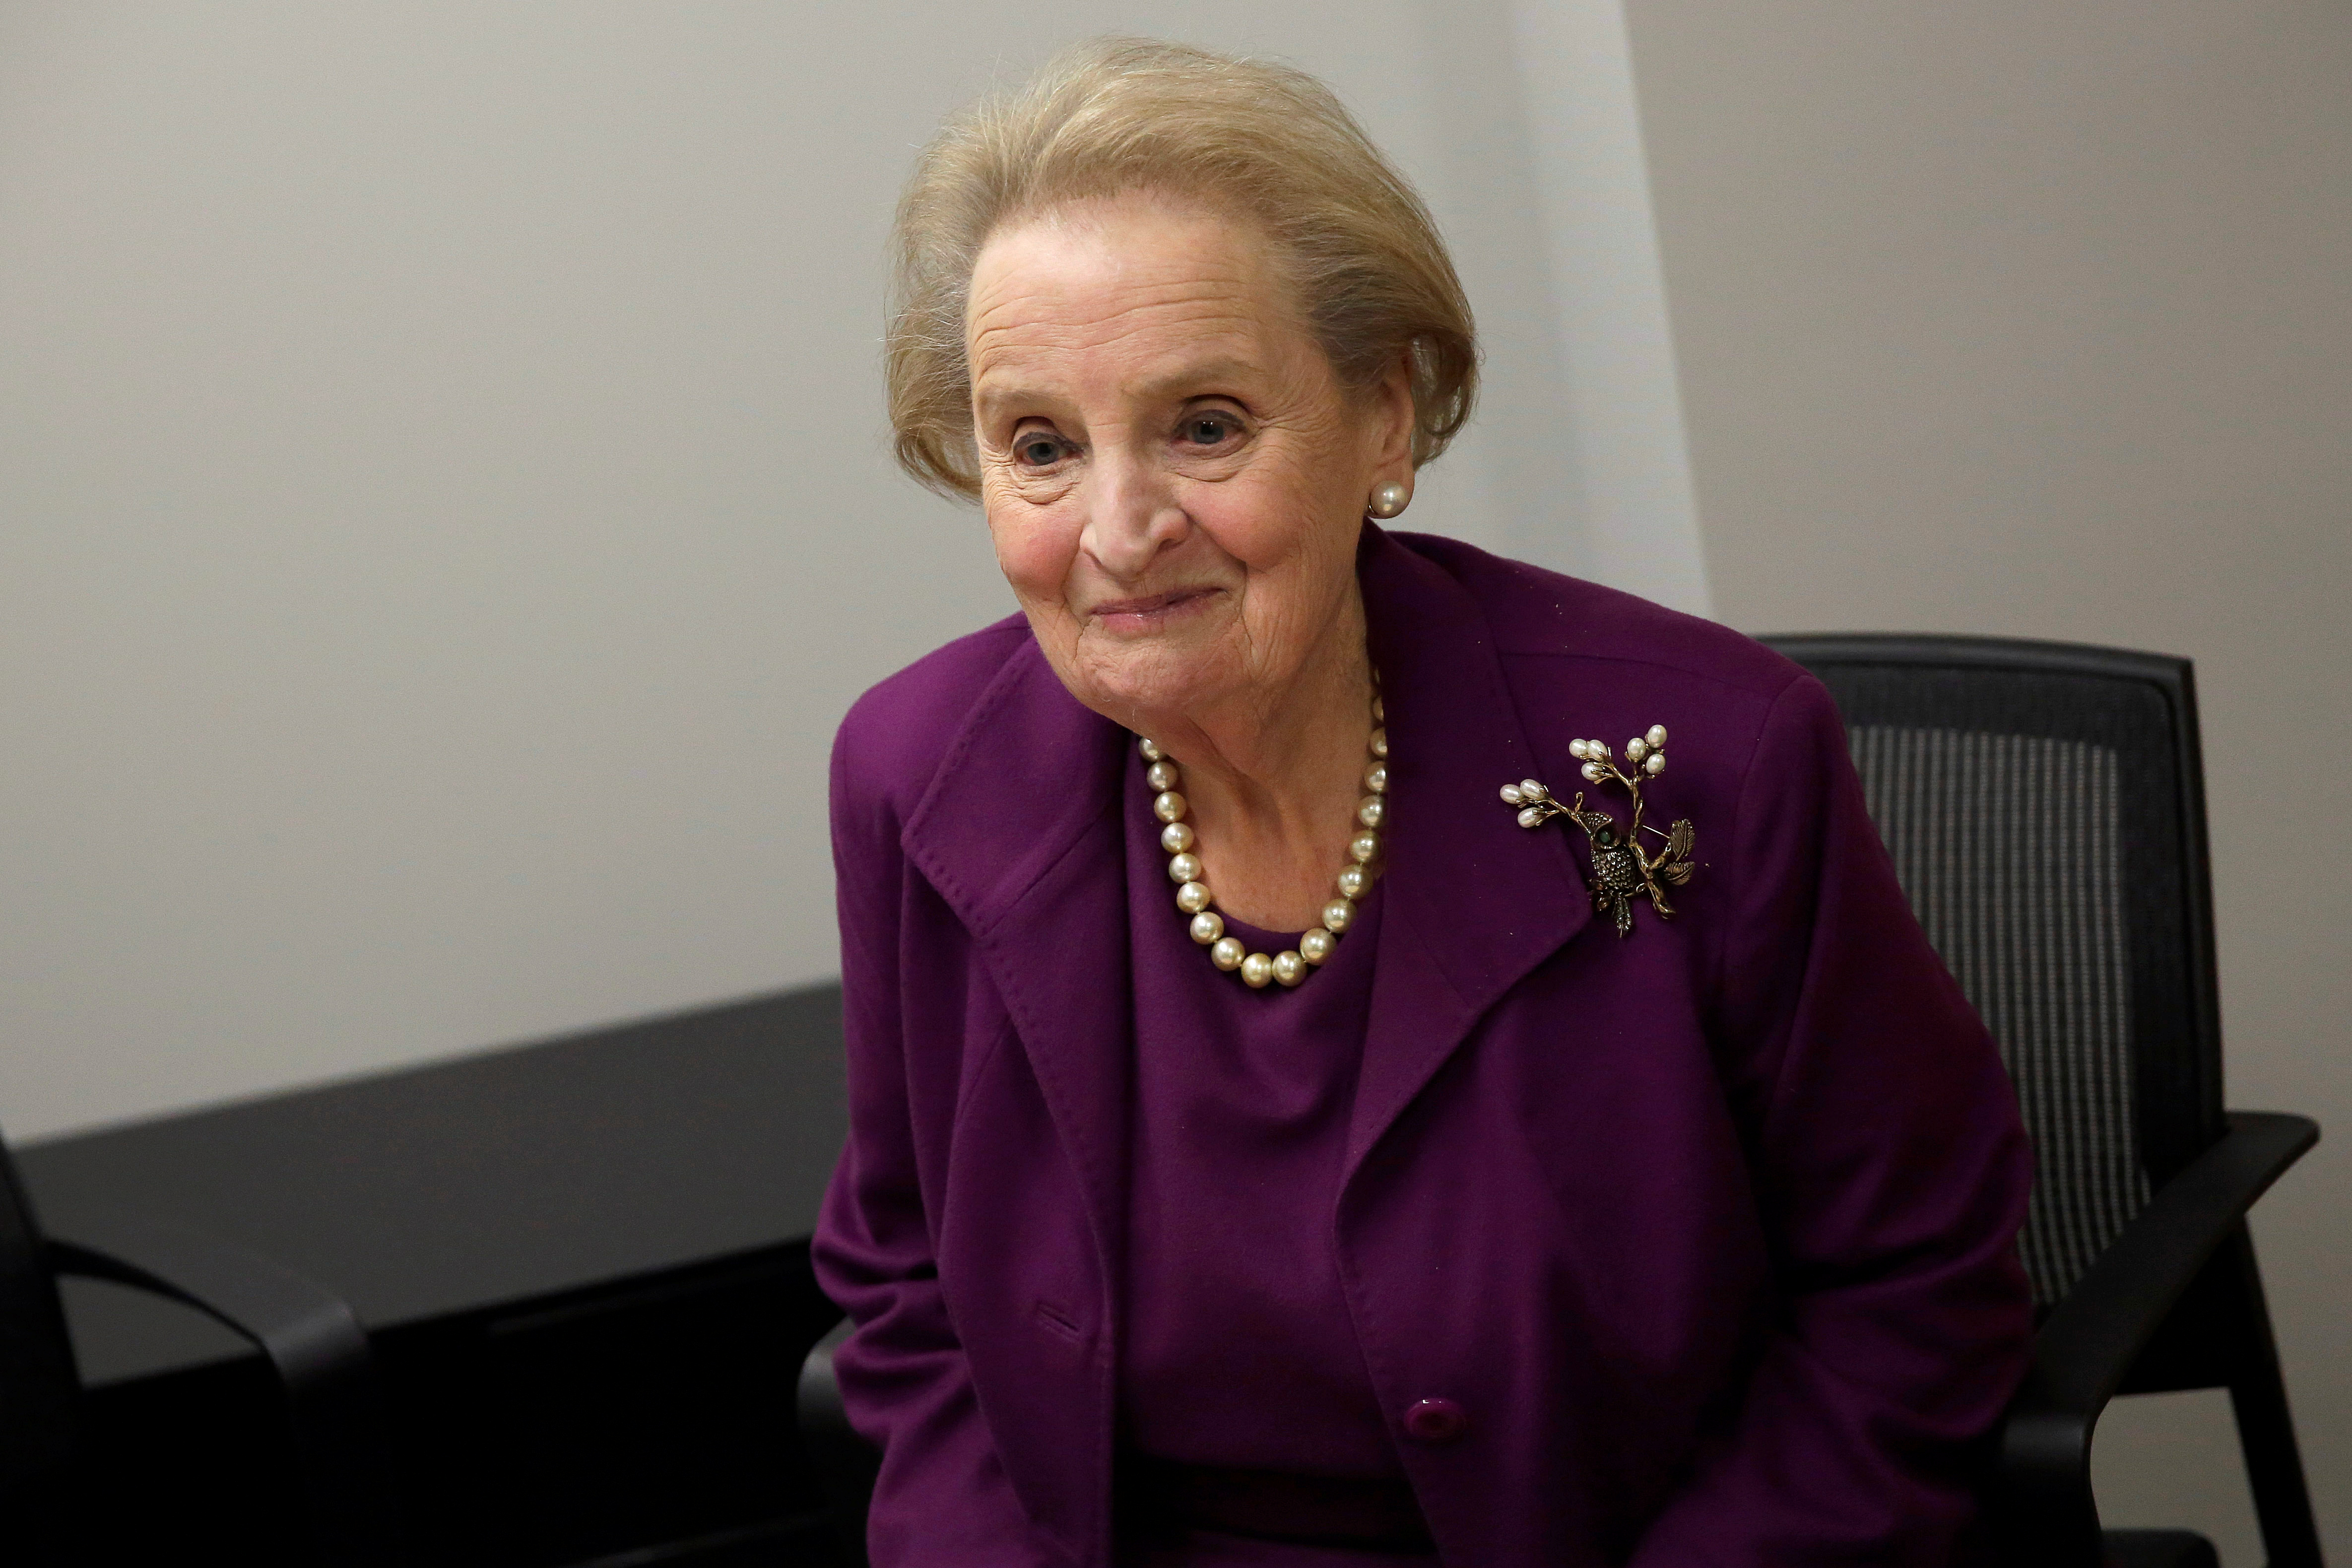 Madeleine Albright, former U.S. secretary of state and feminist